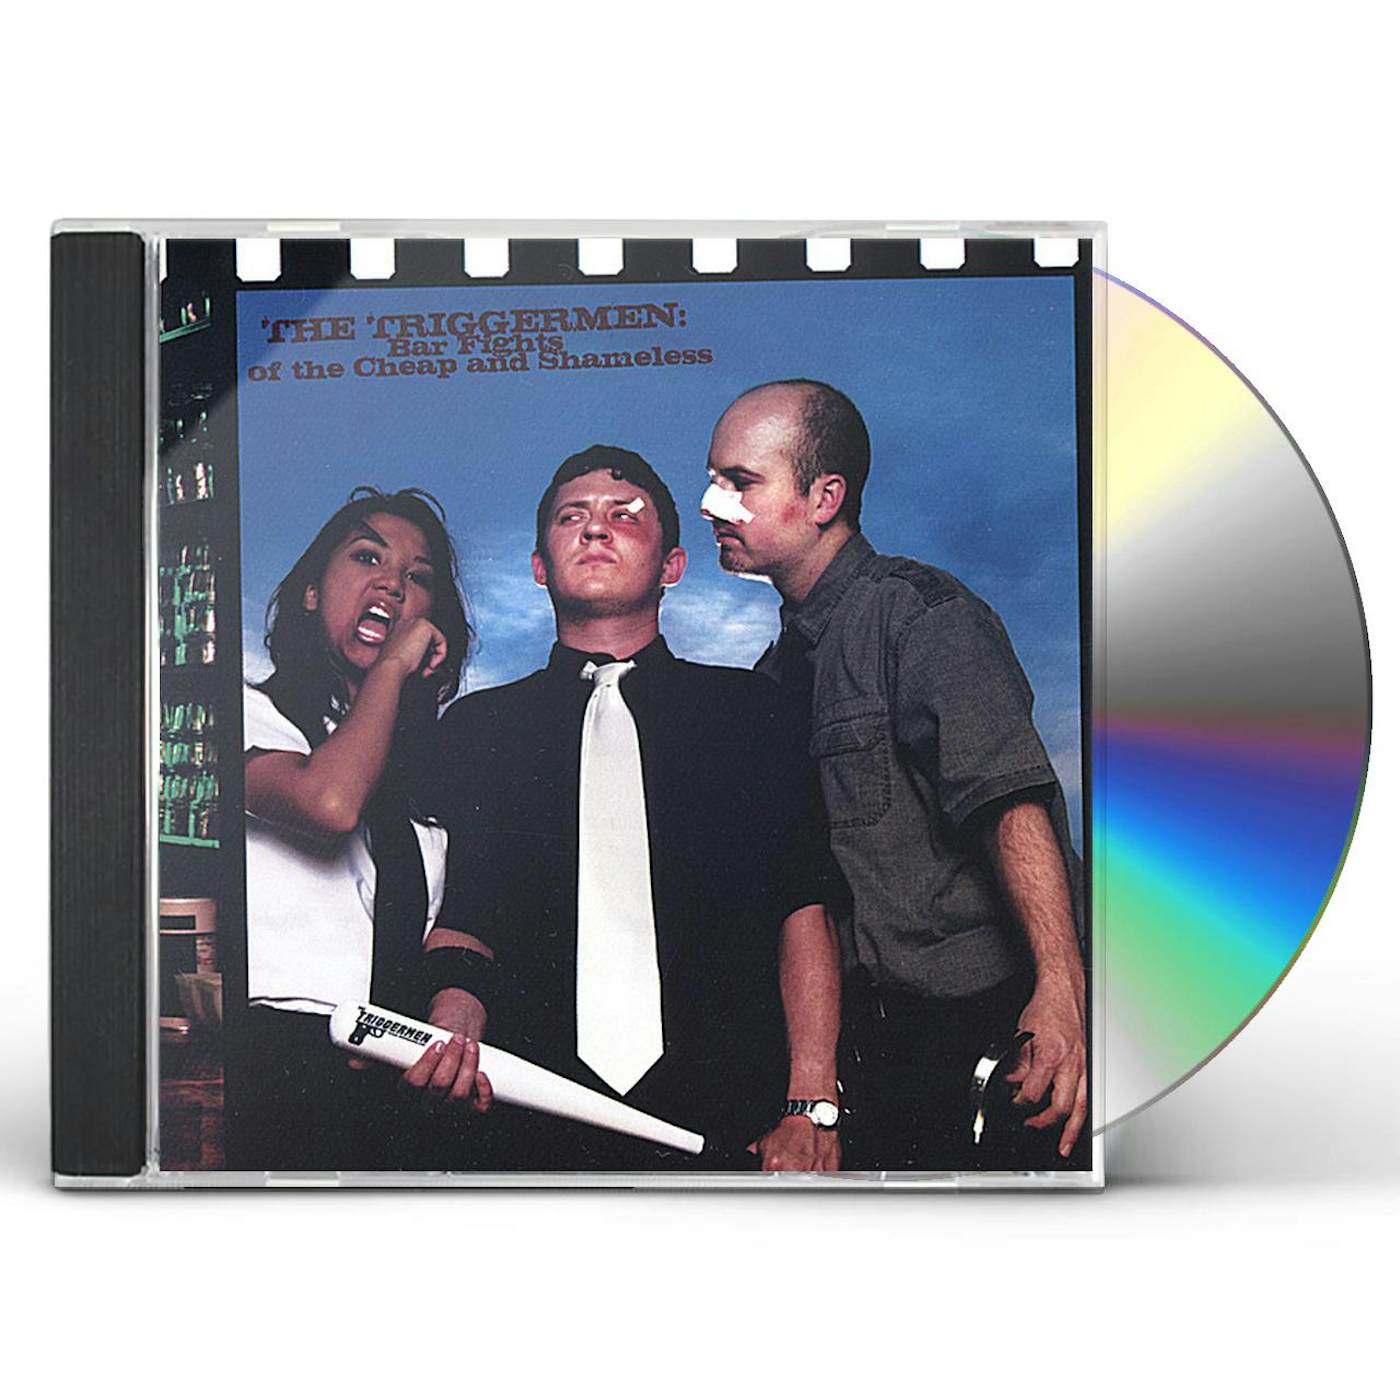 The Triggermen BARFIGHTS OF THE CHEAP & SHAMLESS CD